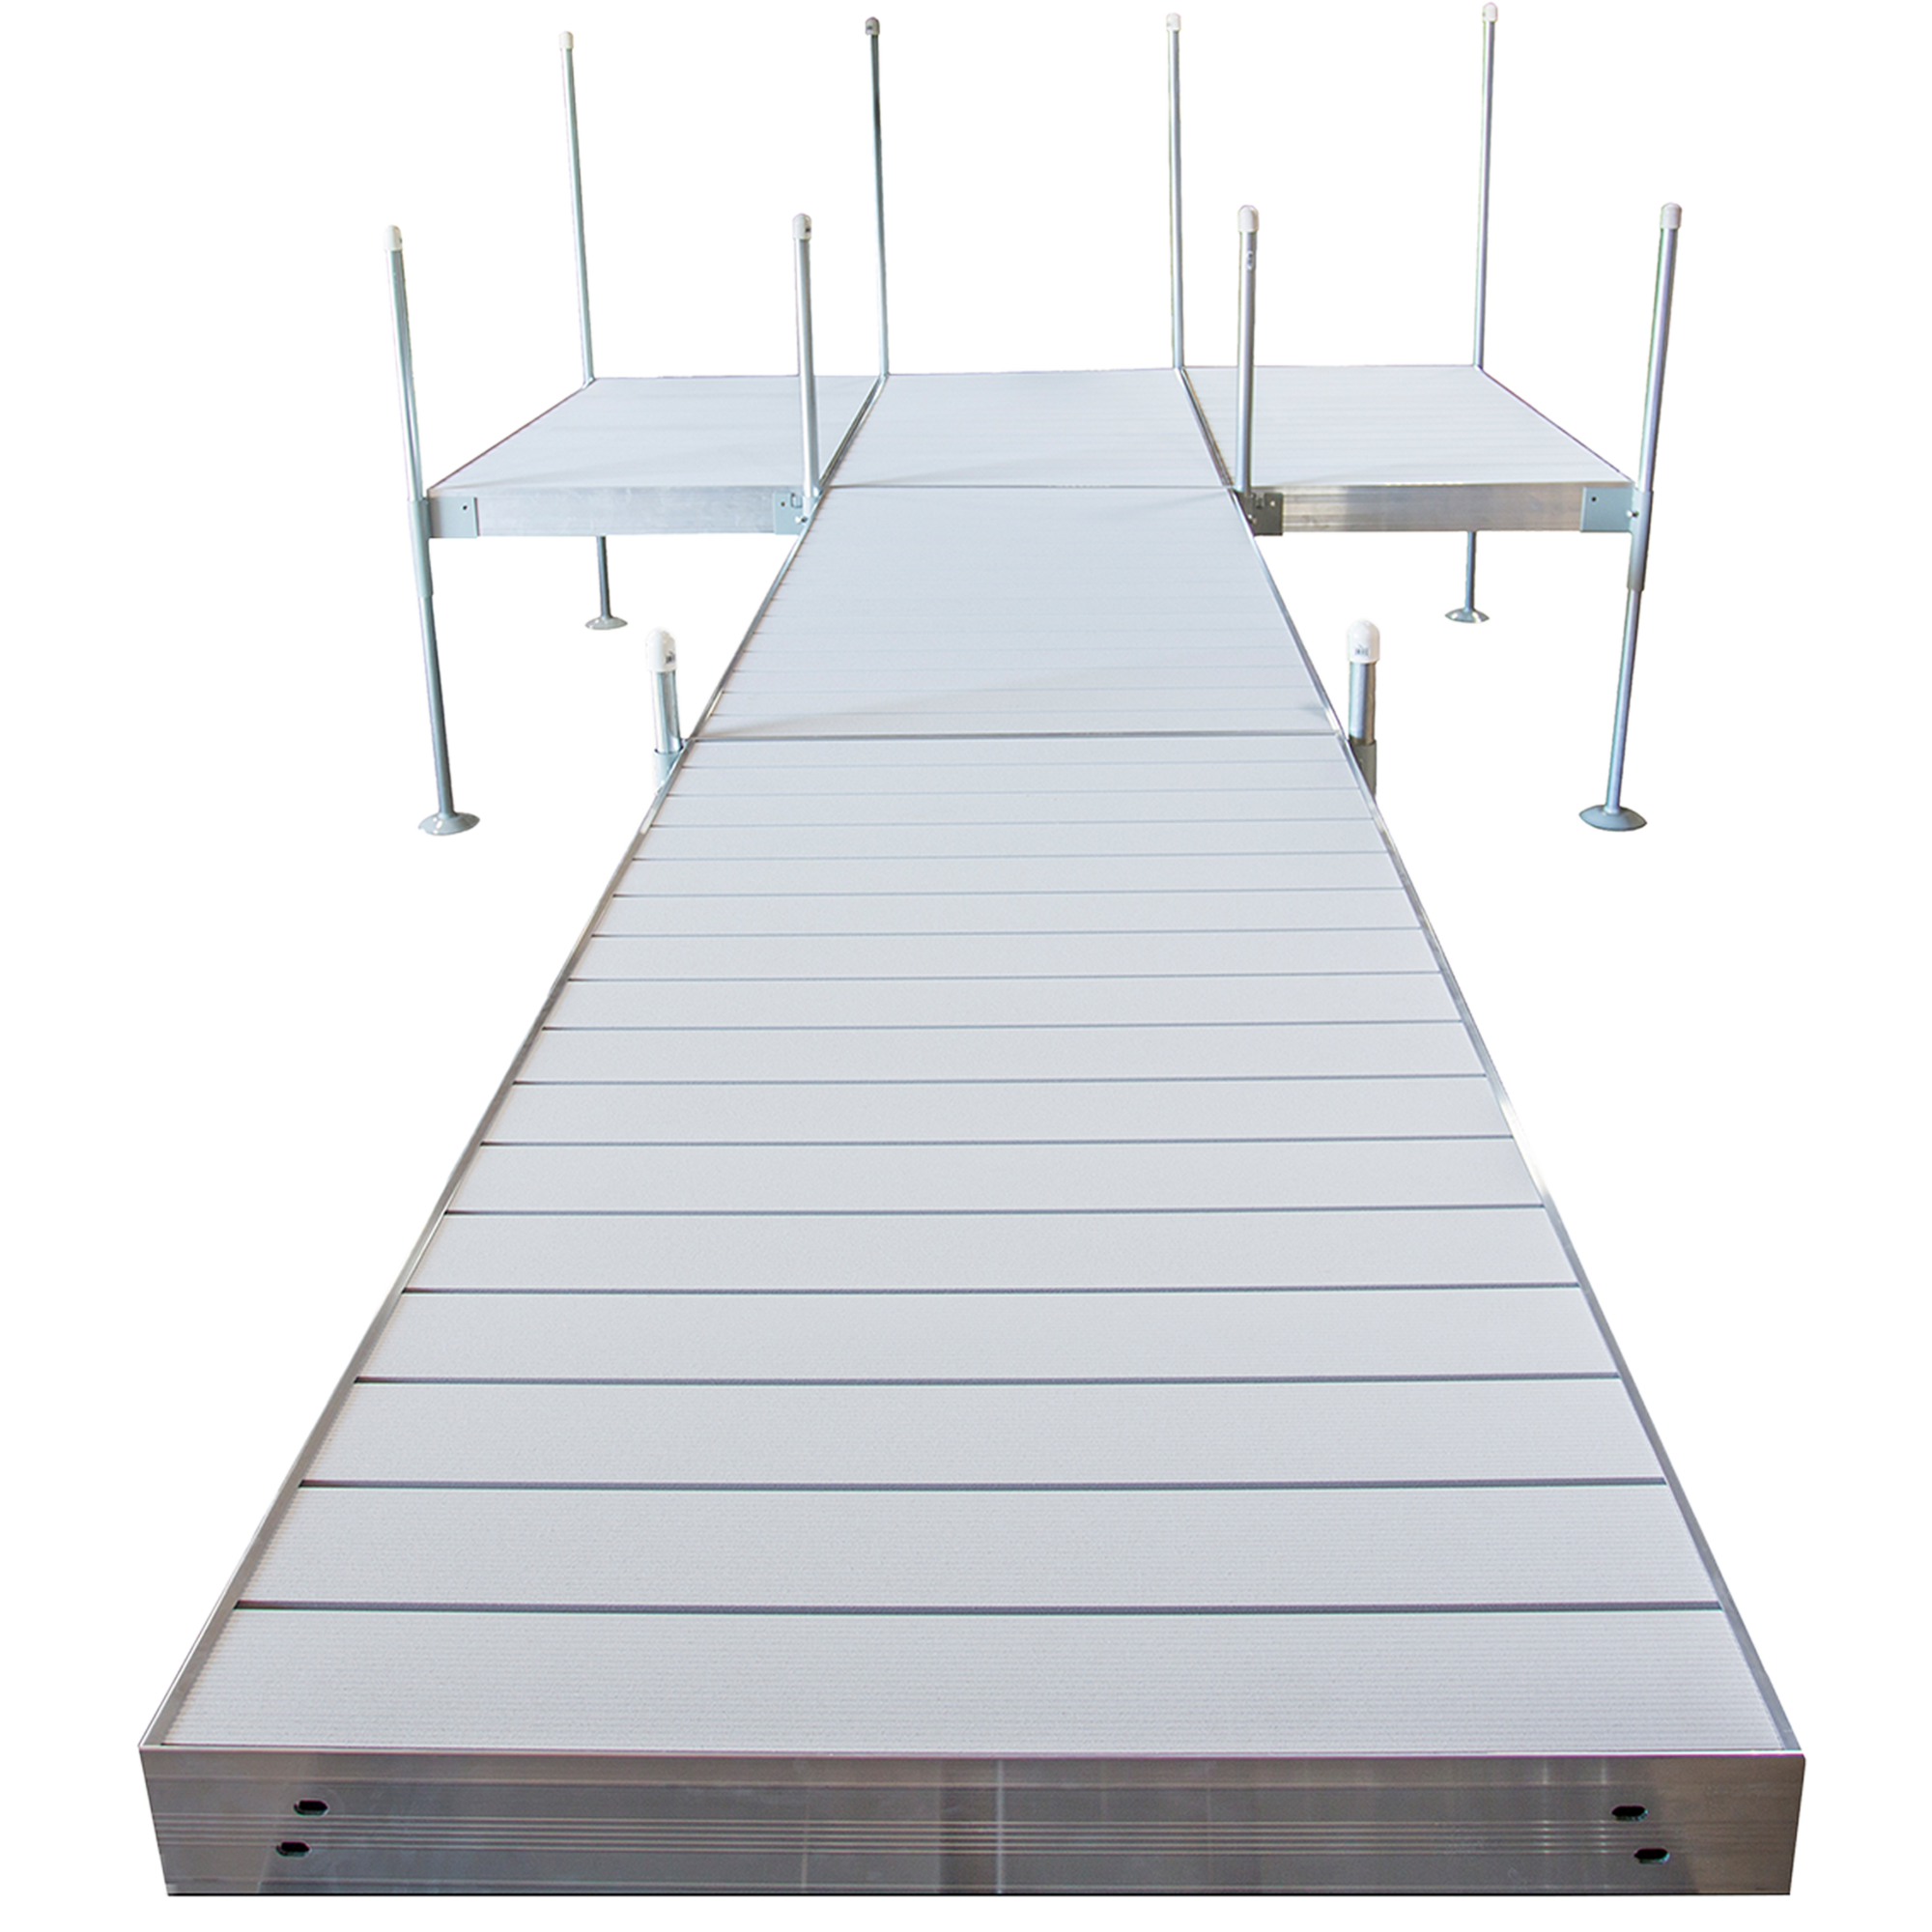 24’ Platform Boat Dock System with Aluminum Frame and Aluminum Decking